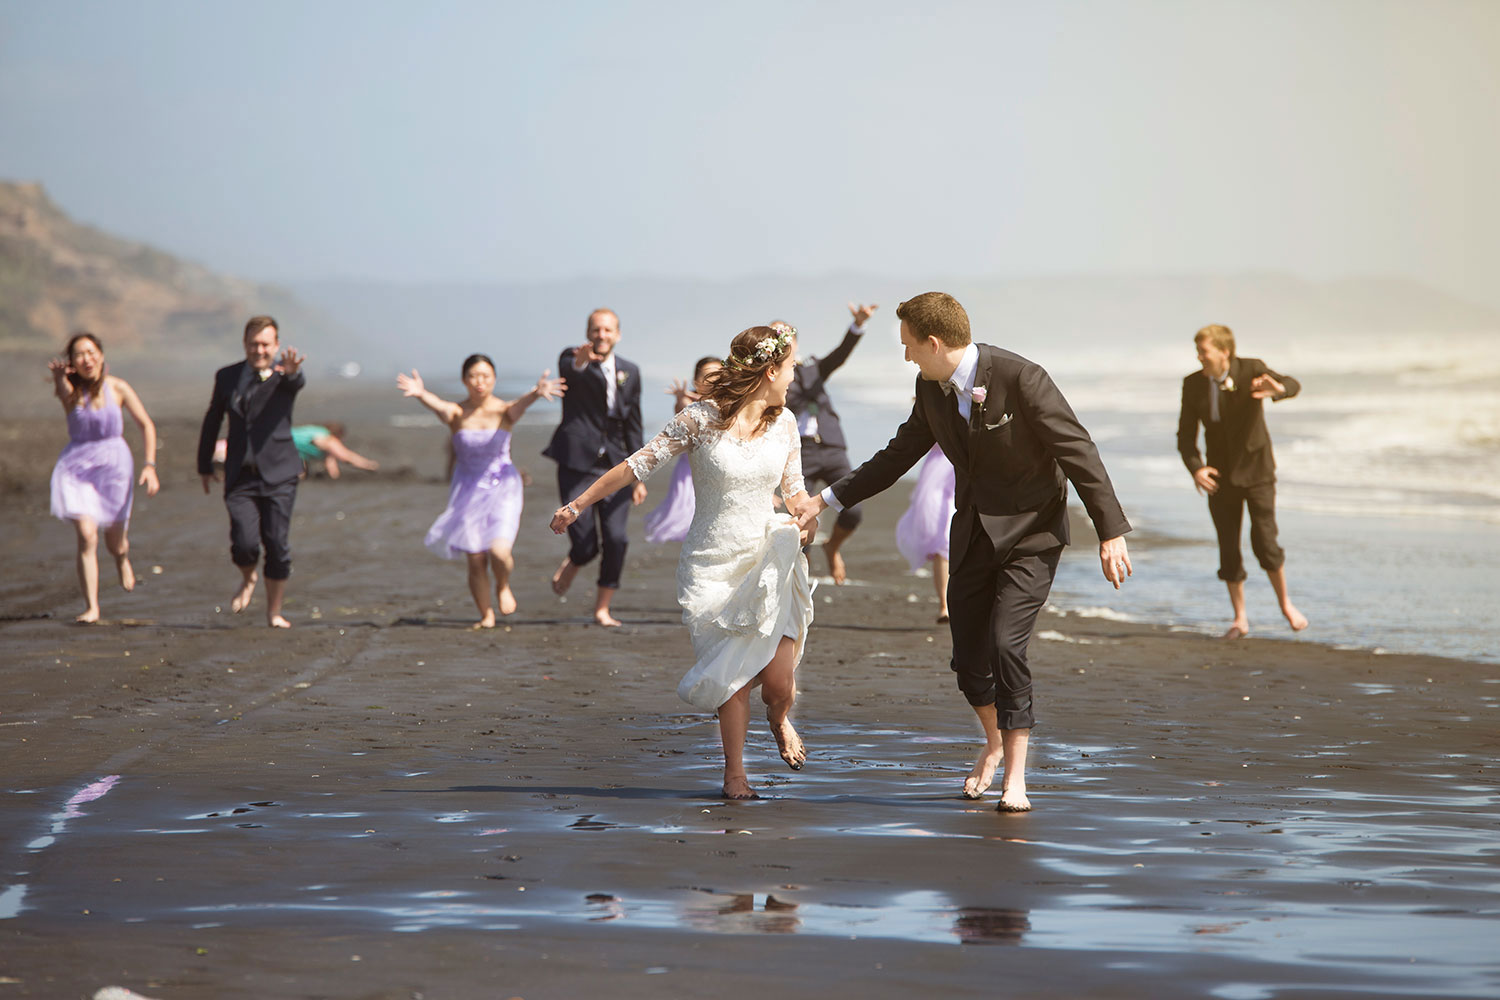 auckland castaways resort wedding bridal party chasing couple